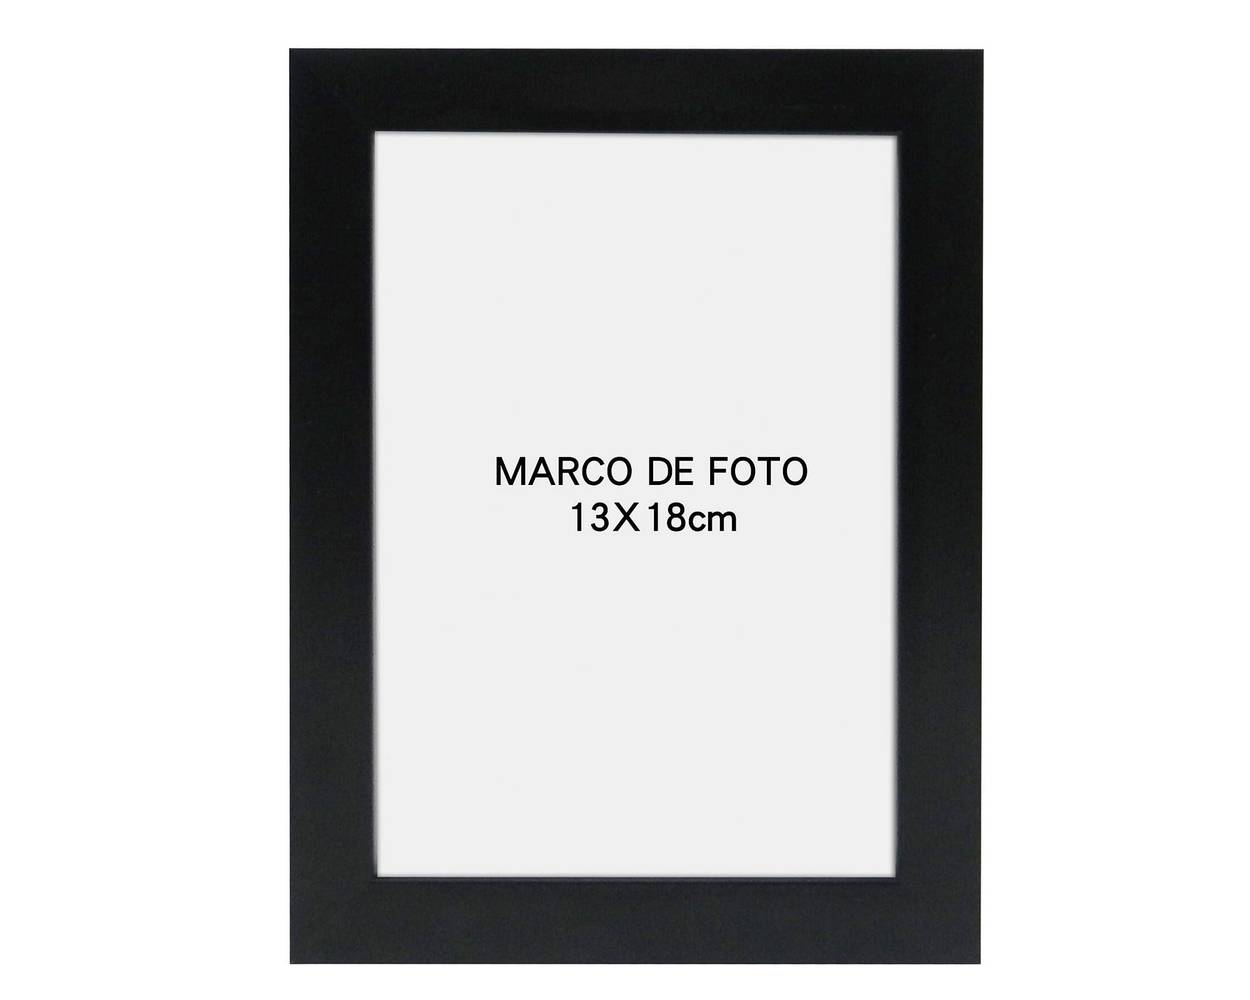 Marco foto 13x18cm negro ronda (13 x 18 cm)